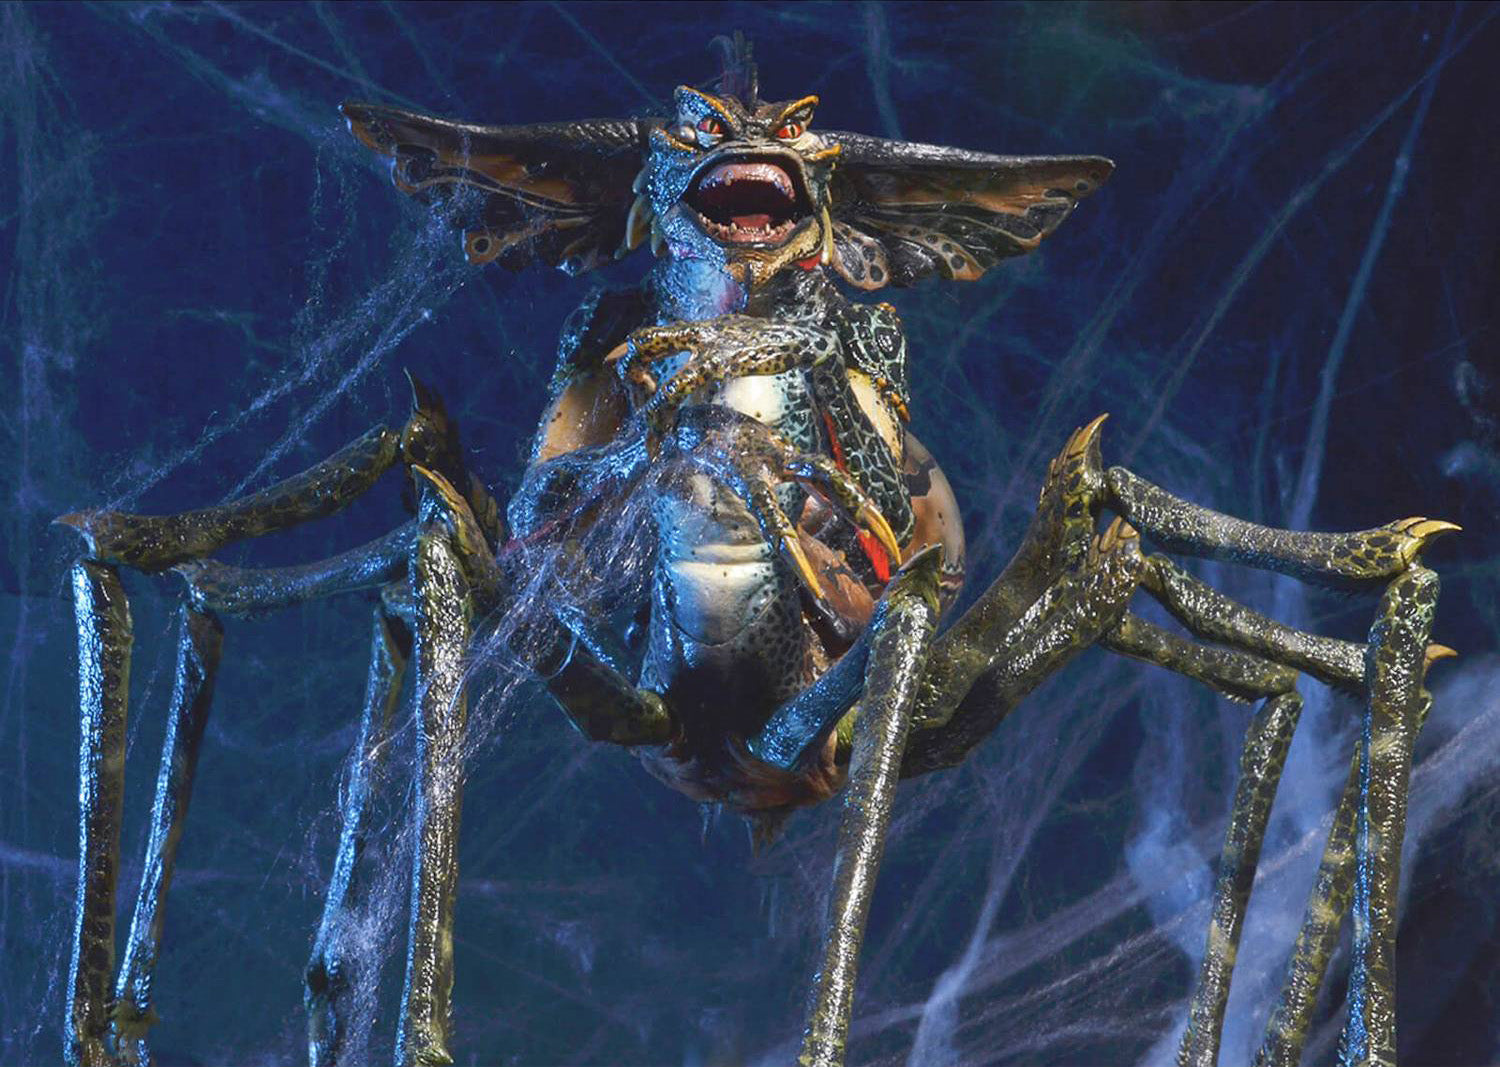 Neca - Gremlins 2: The New Batch - 7" Spider Gremlin - Marvelous Toys